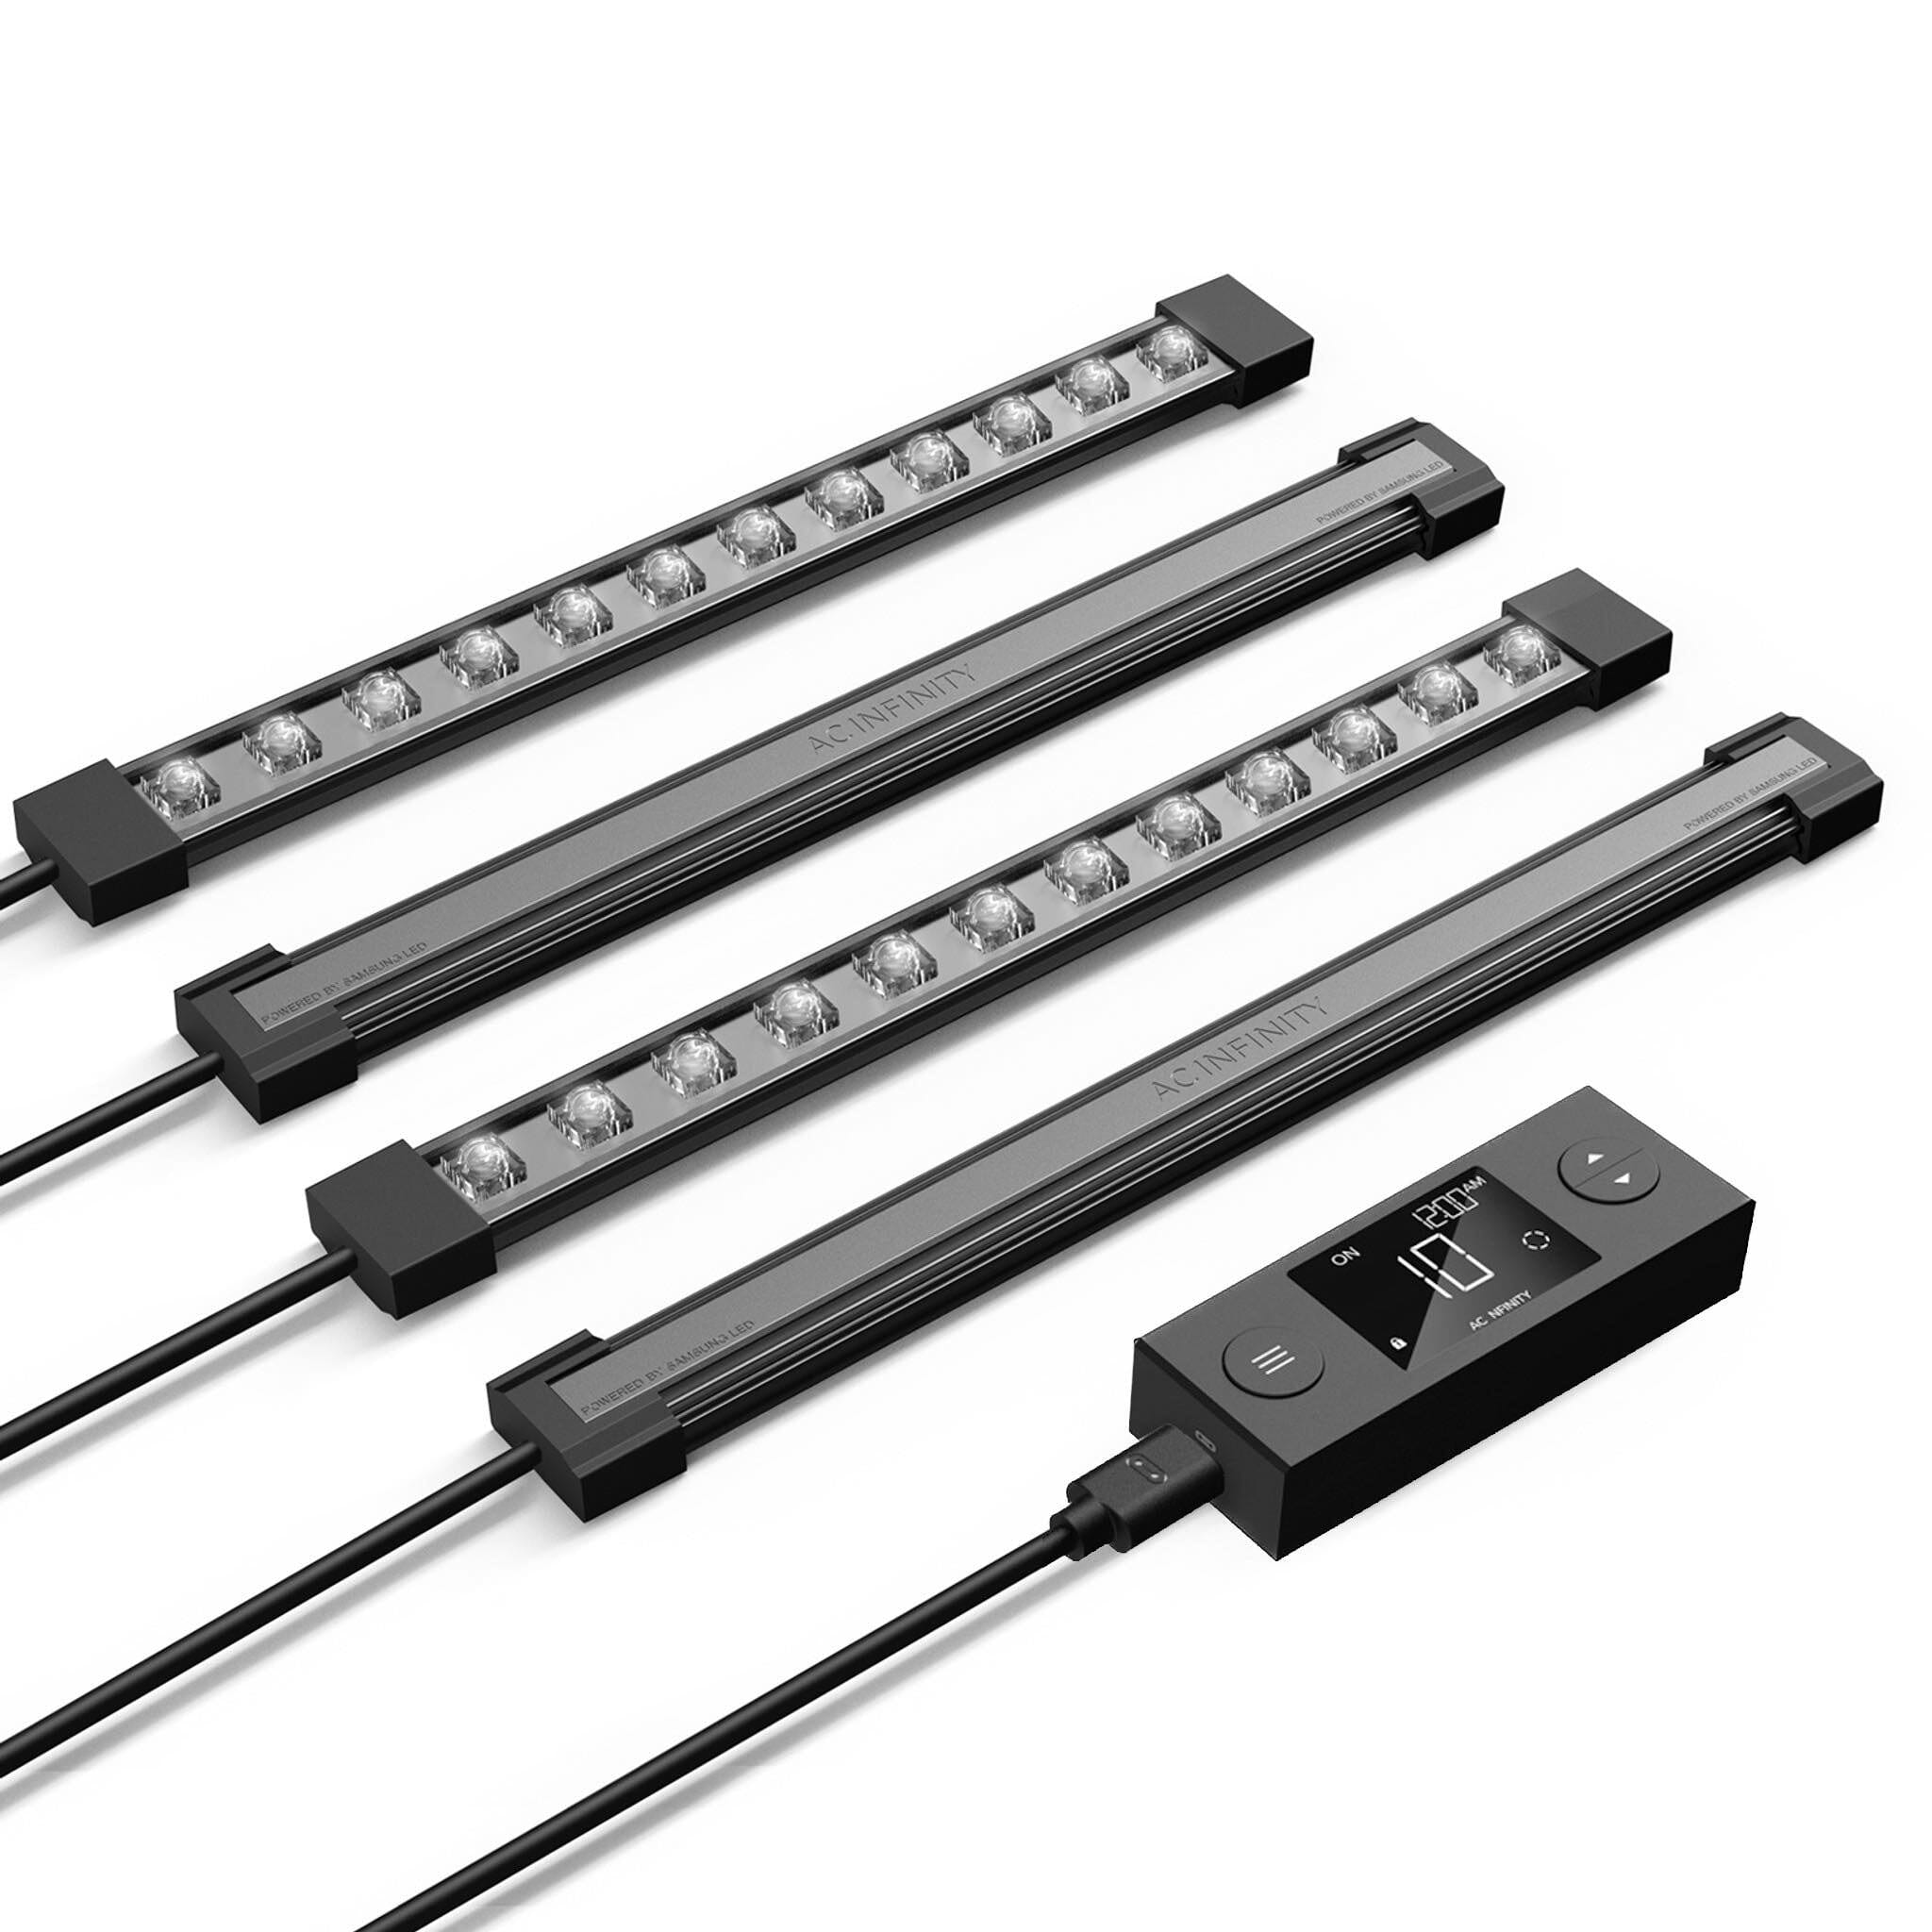 AC Infinity Ionbeam S11 LED grow light bars